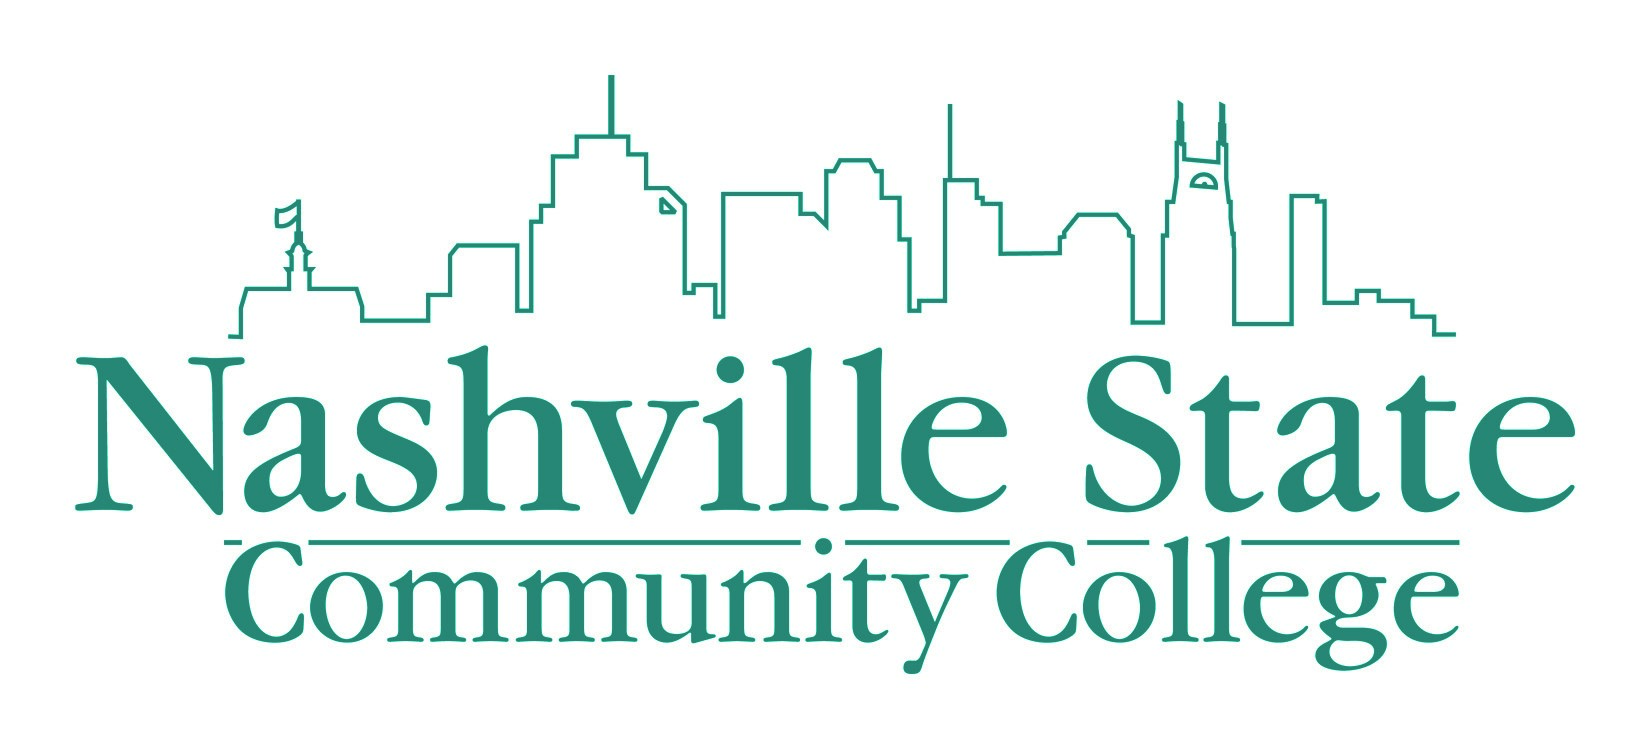 Nashville State Community College post order